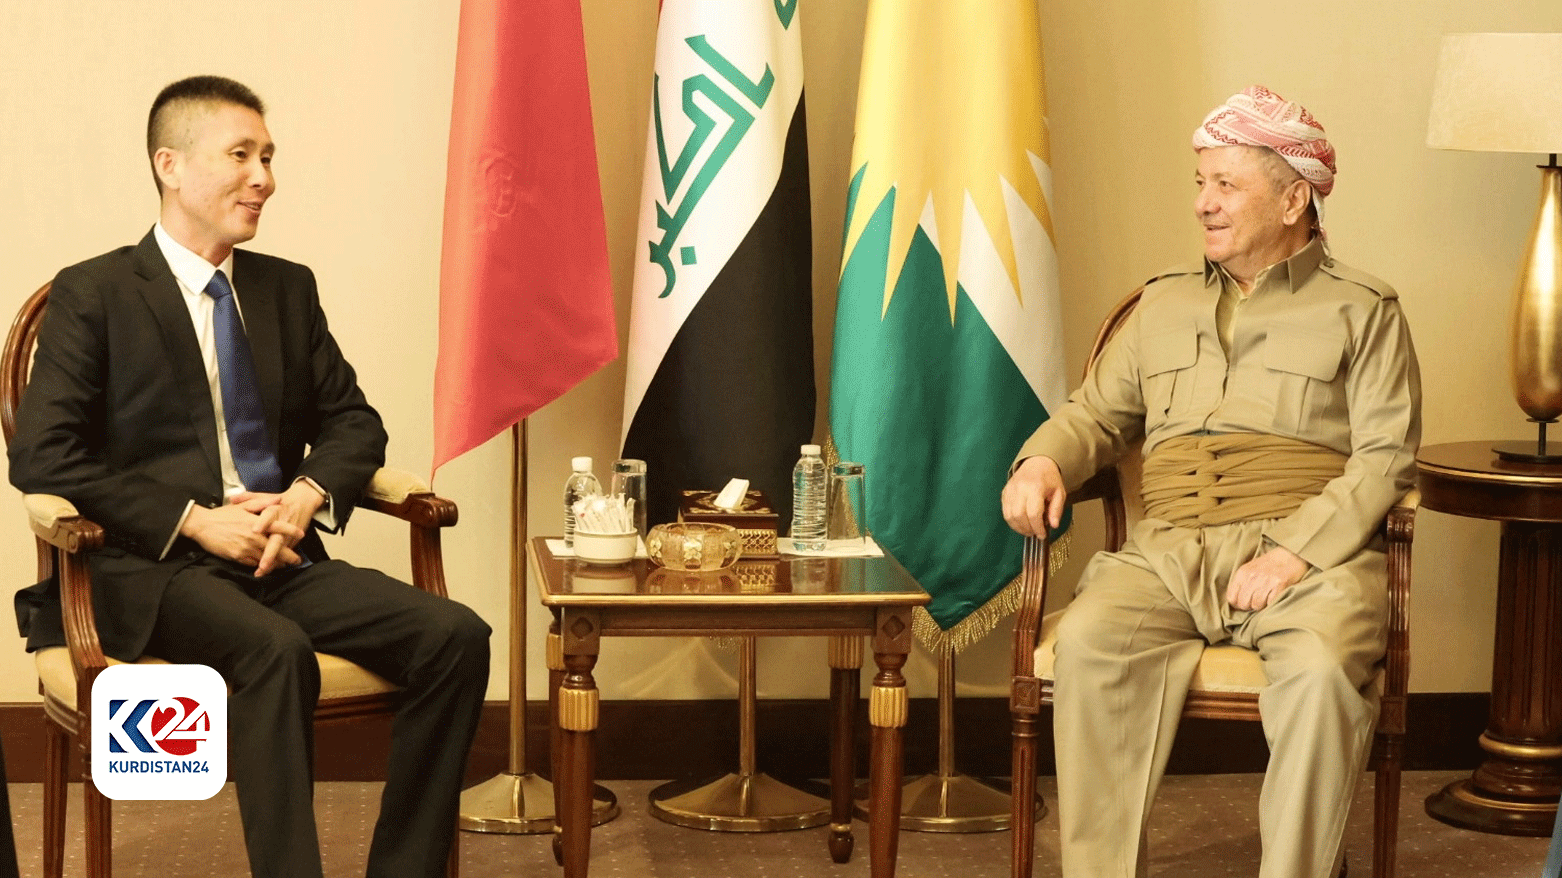 KDP President Masoud Barzani Chinese Ambassador discuss key political issues